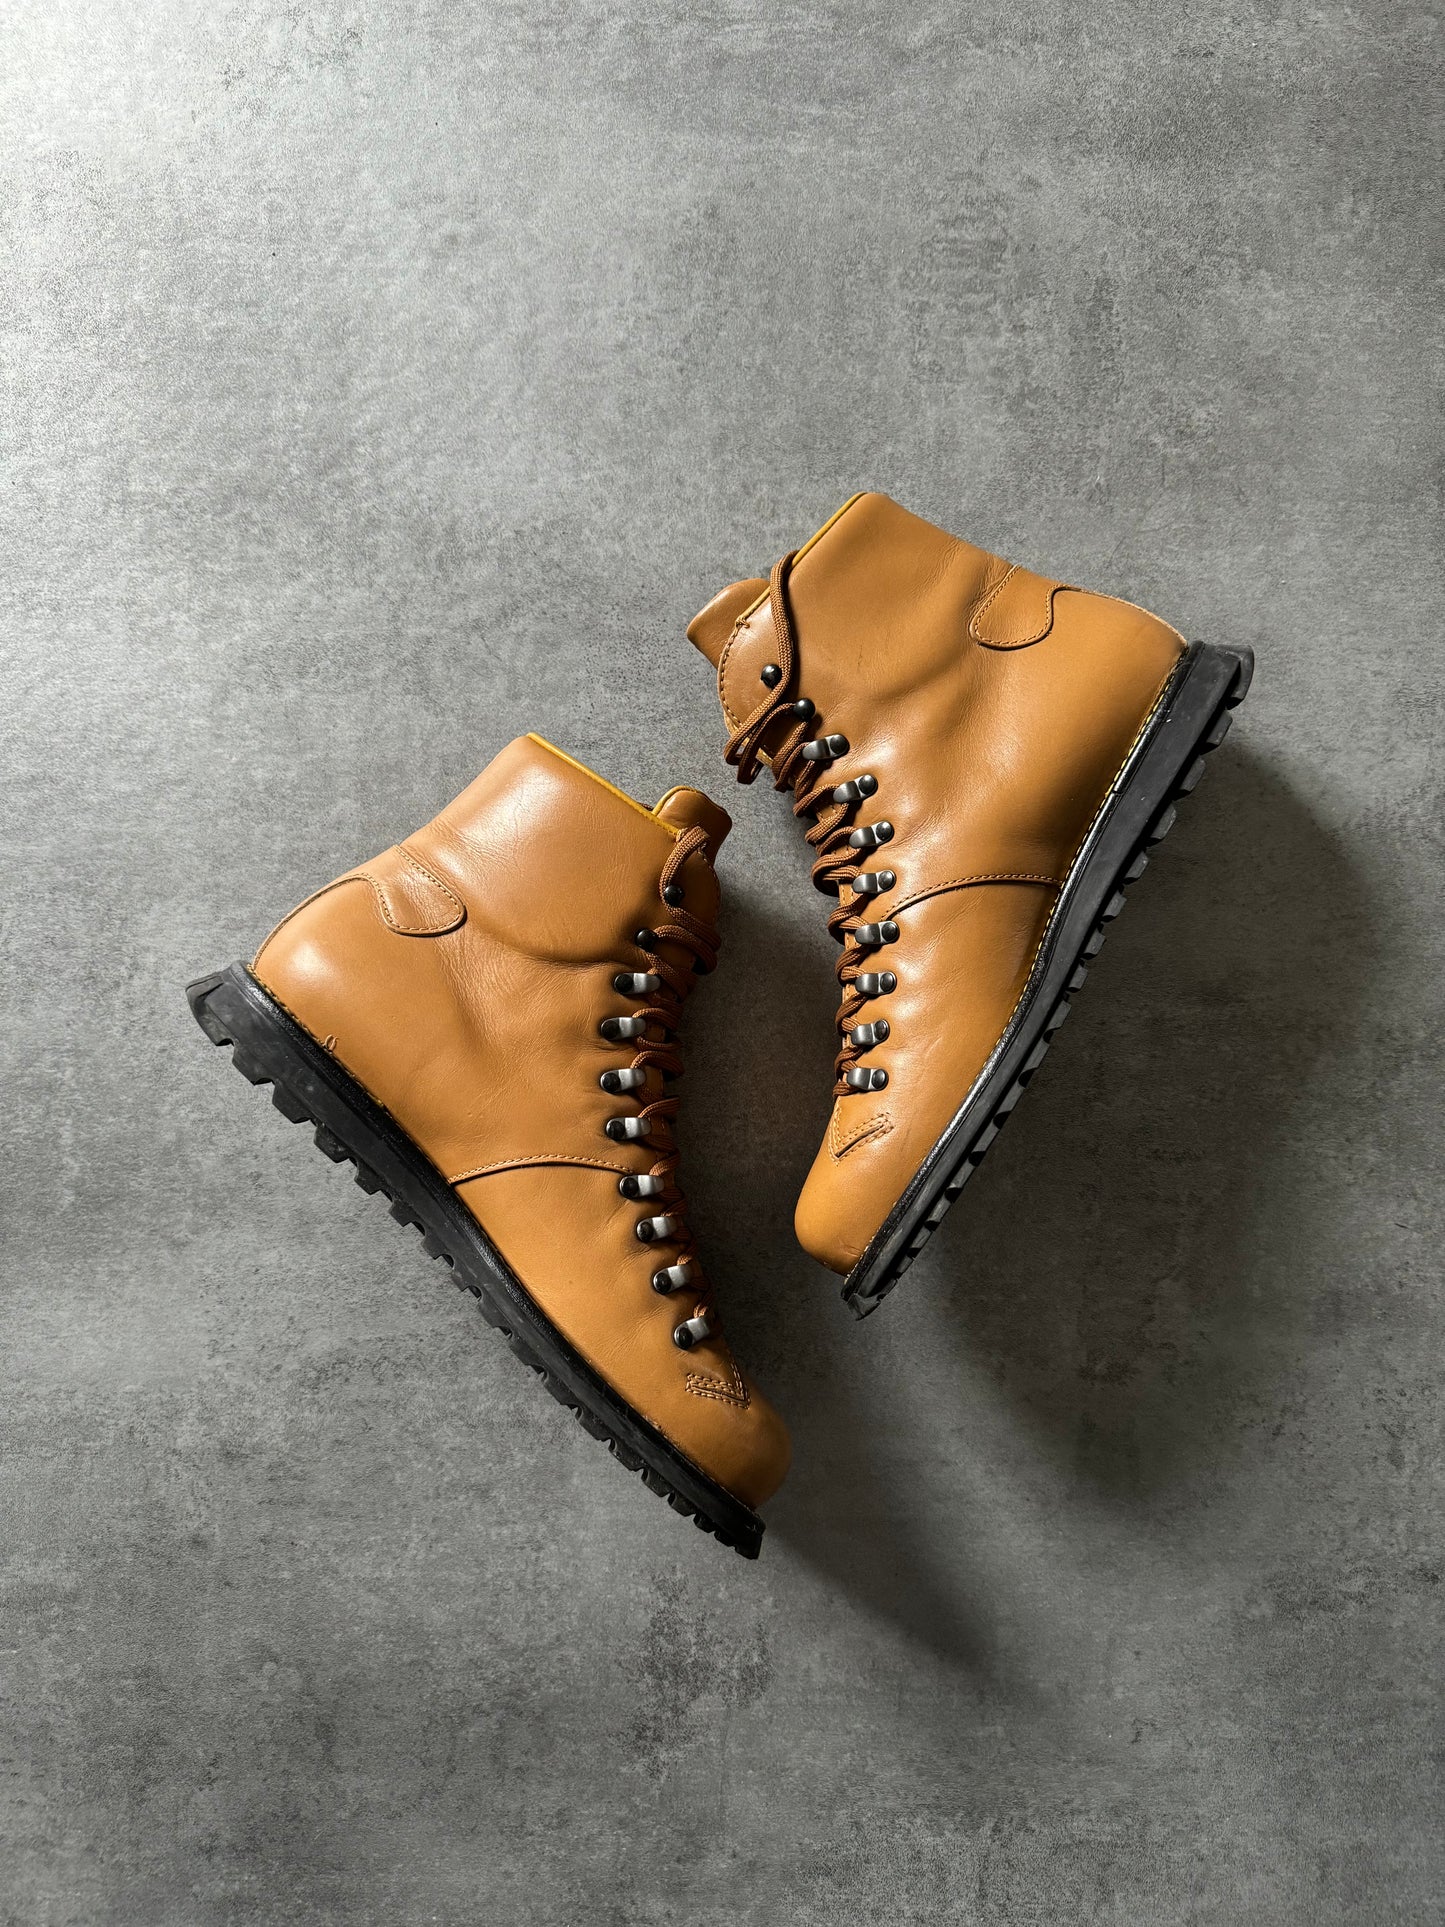 AW2001 Prada Hiking Mountain Leather Boots (42) - 3